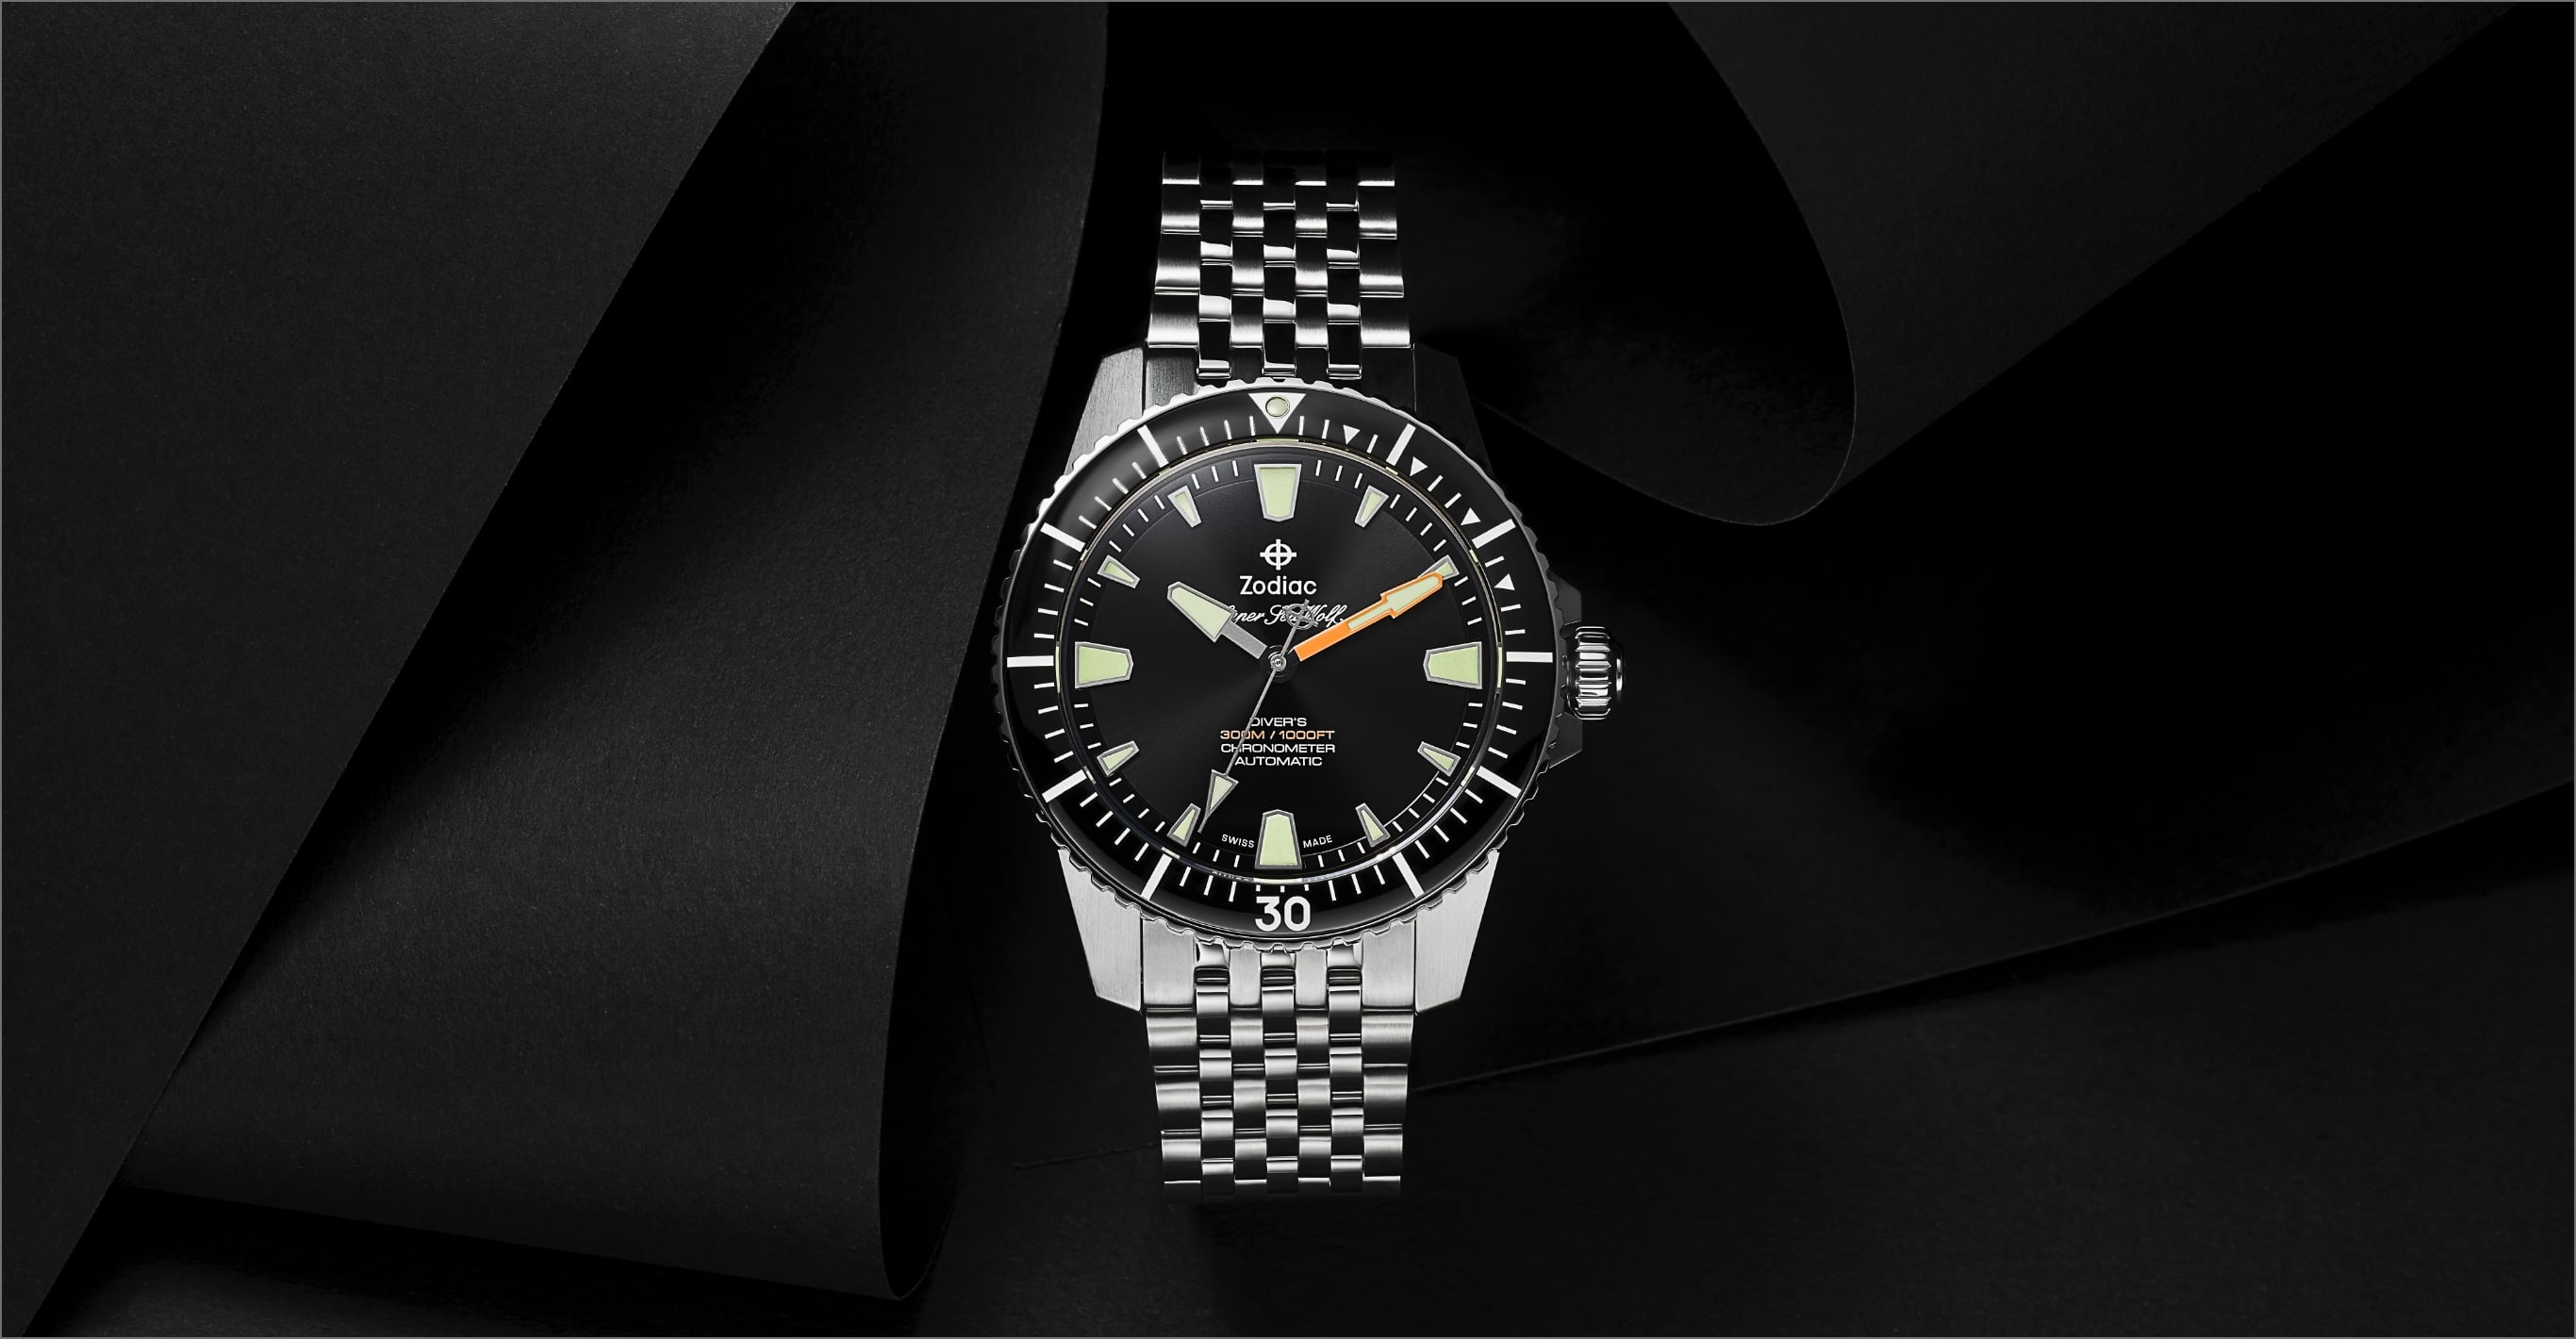 Super Sea Wolf Pro-Diver watch.